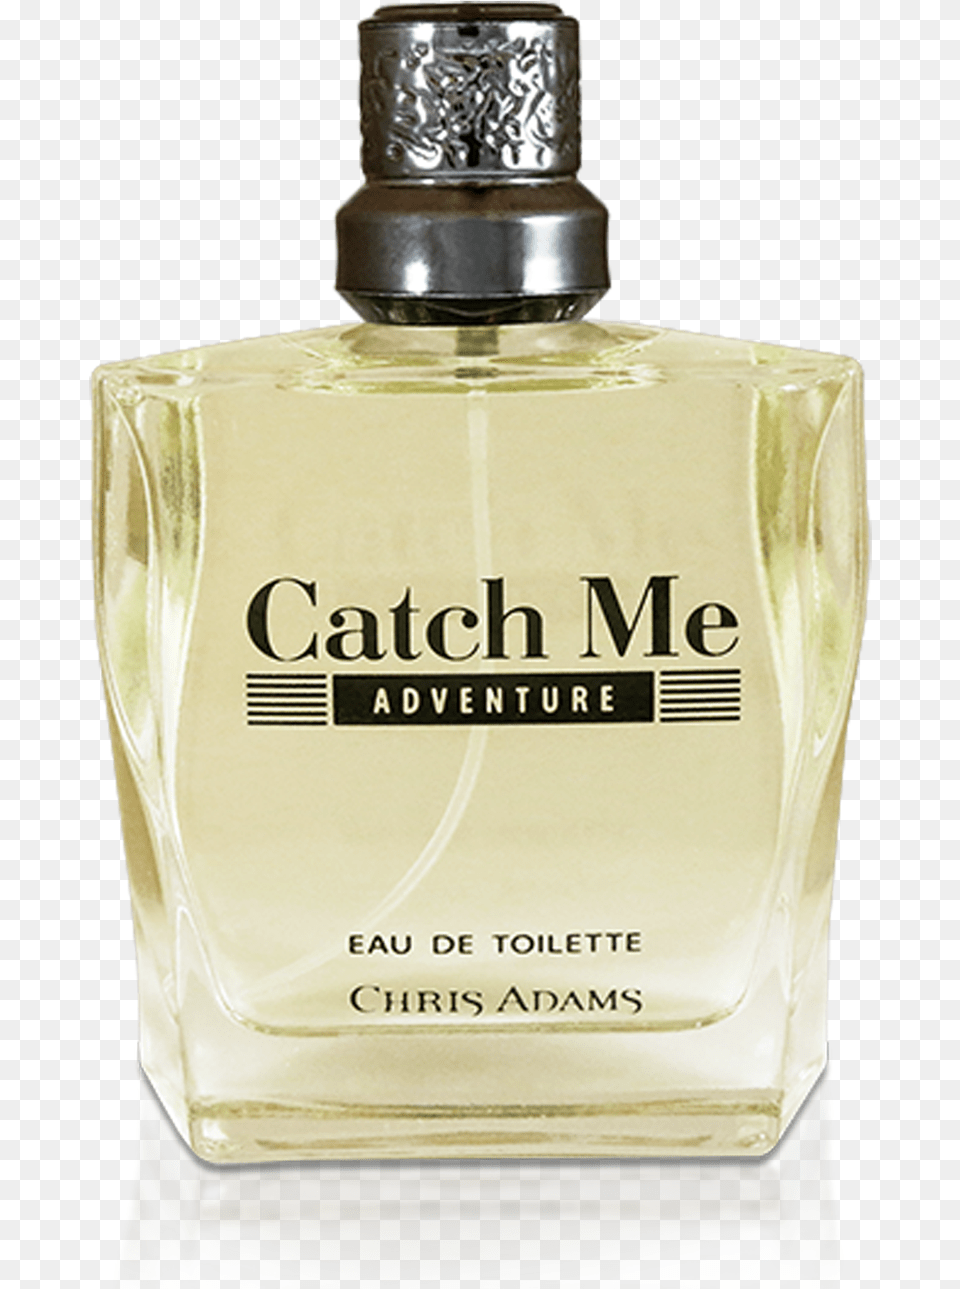 Catch Me Adventure Chris Adams Perfume Catch Me Aqua Sport, Bottle, Cosmetics, Aftershave Free Png